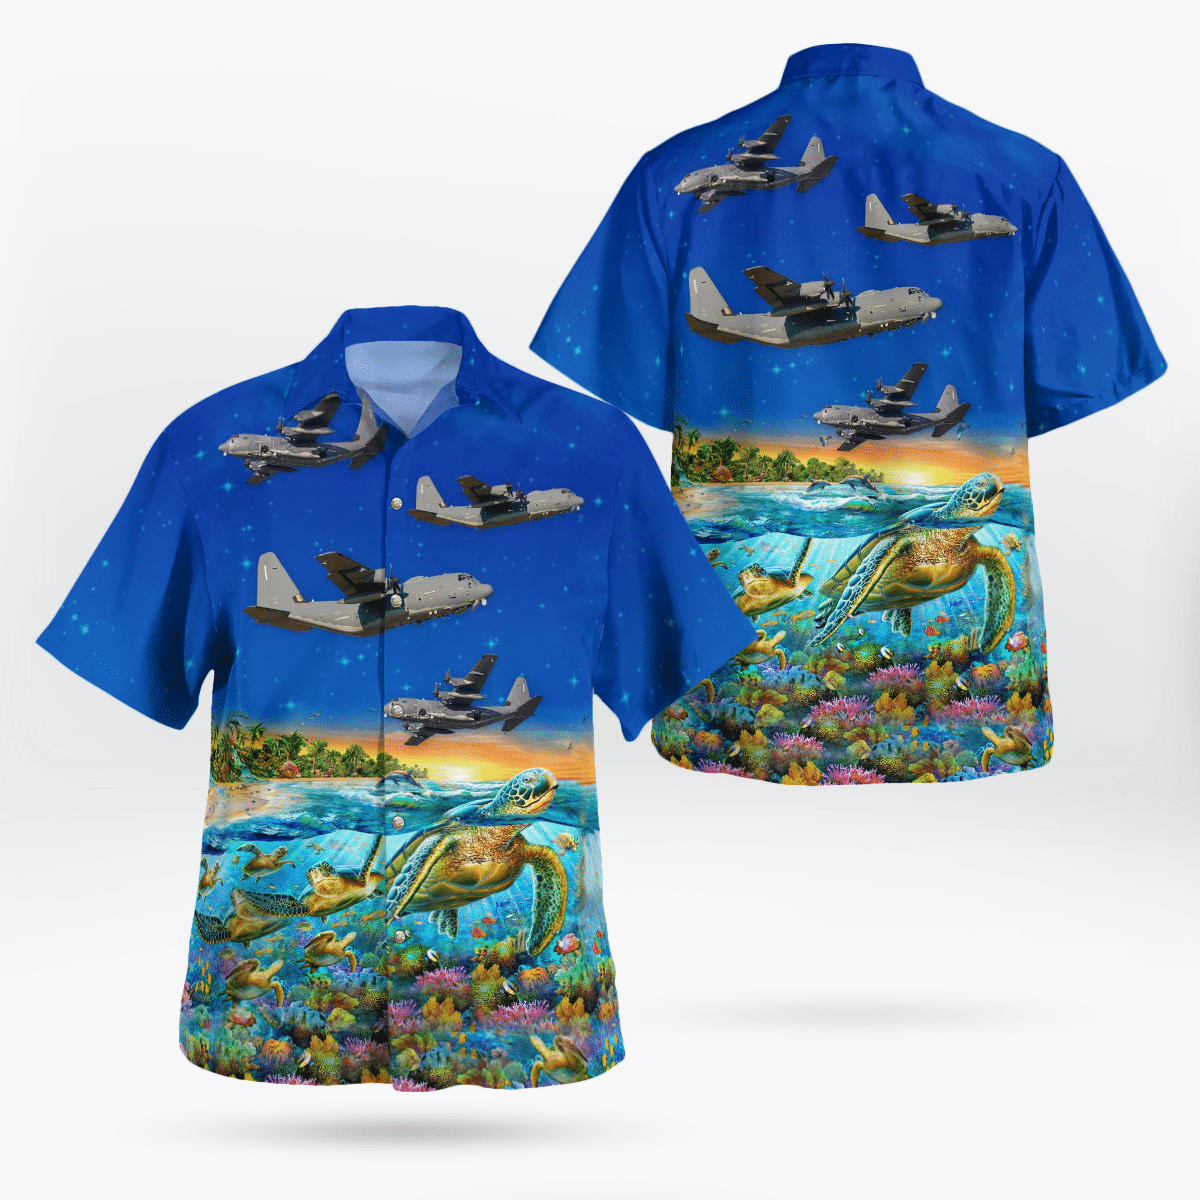 Why don't you order Hot Hawaiian Shirt today? 215